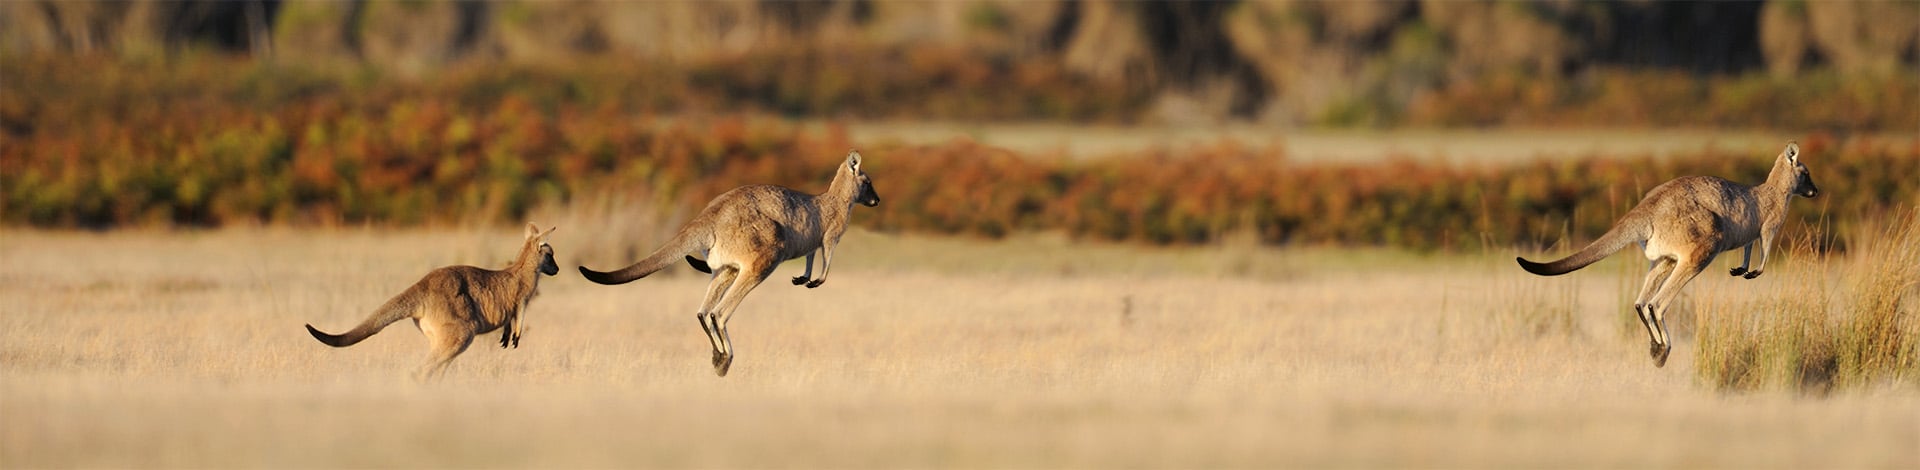 kanguru vorsorge